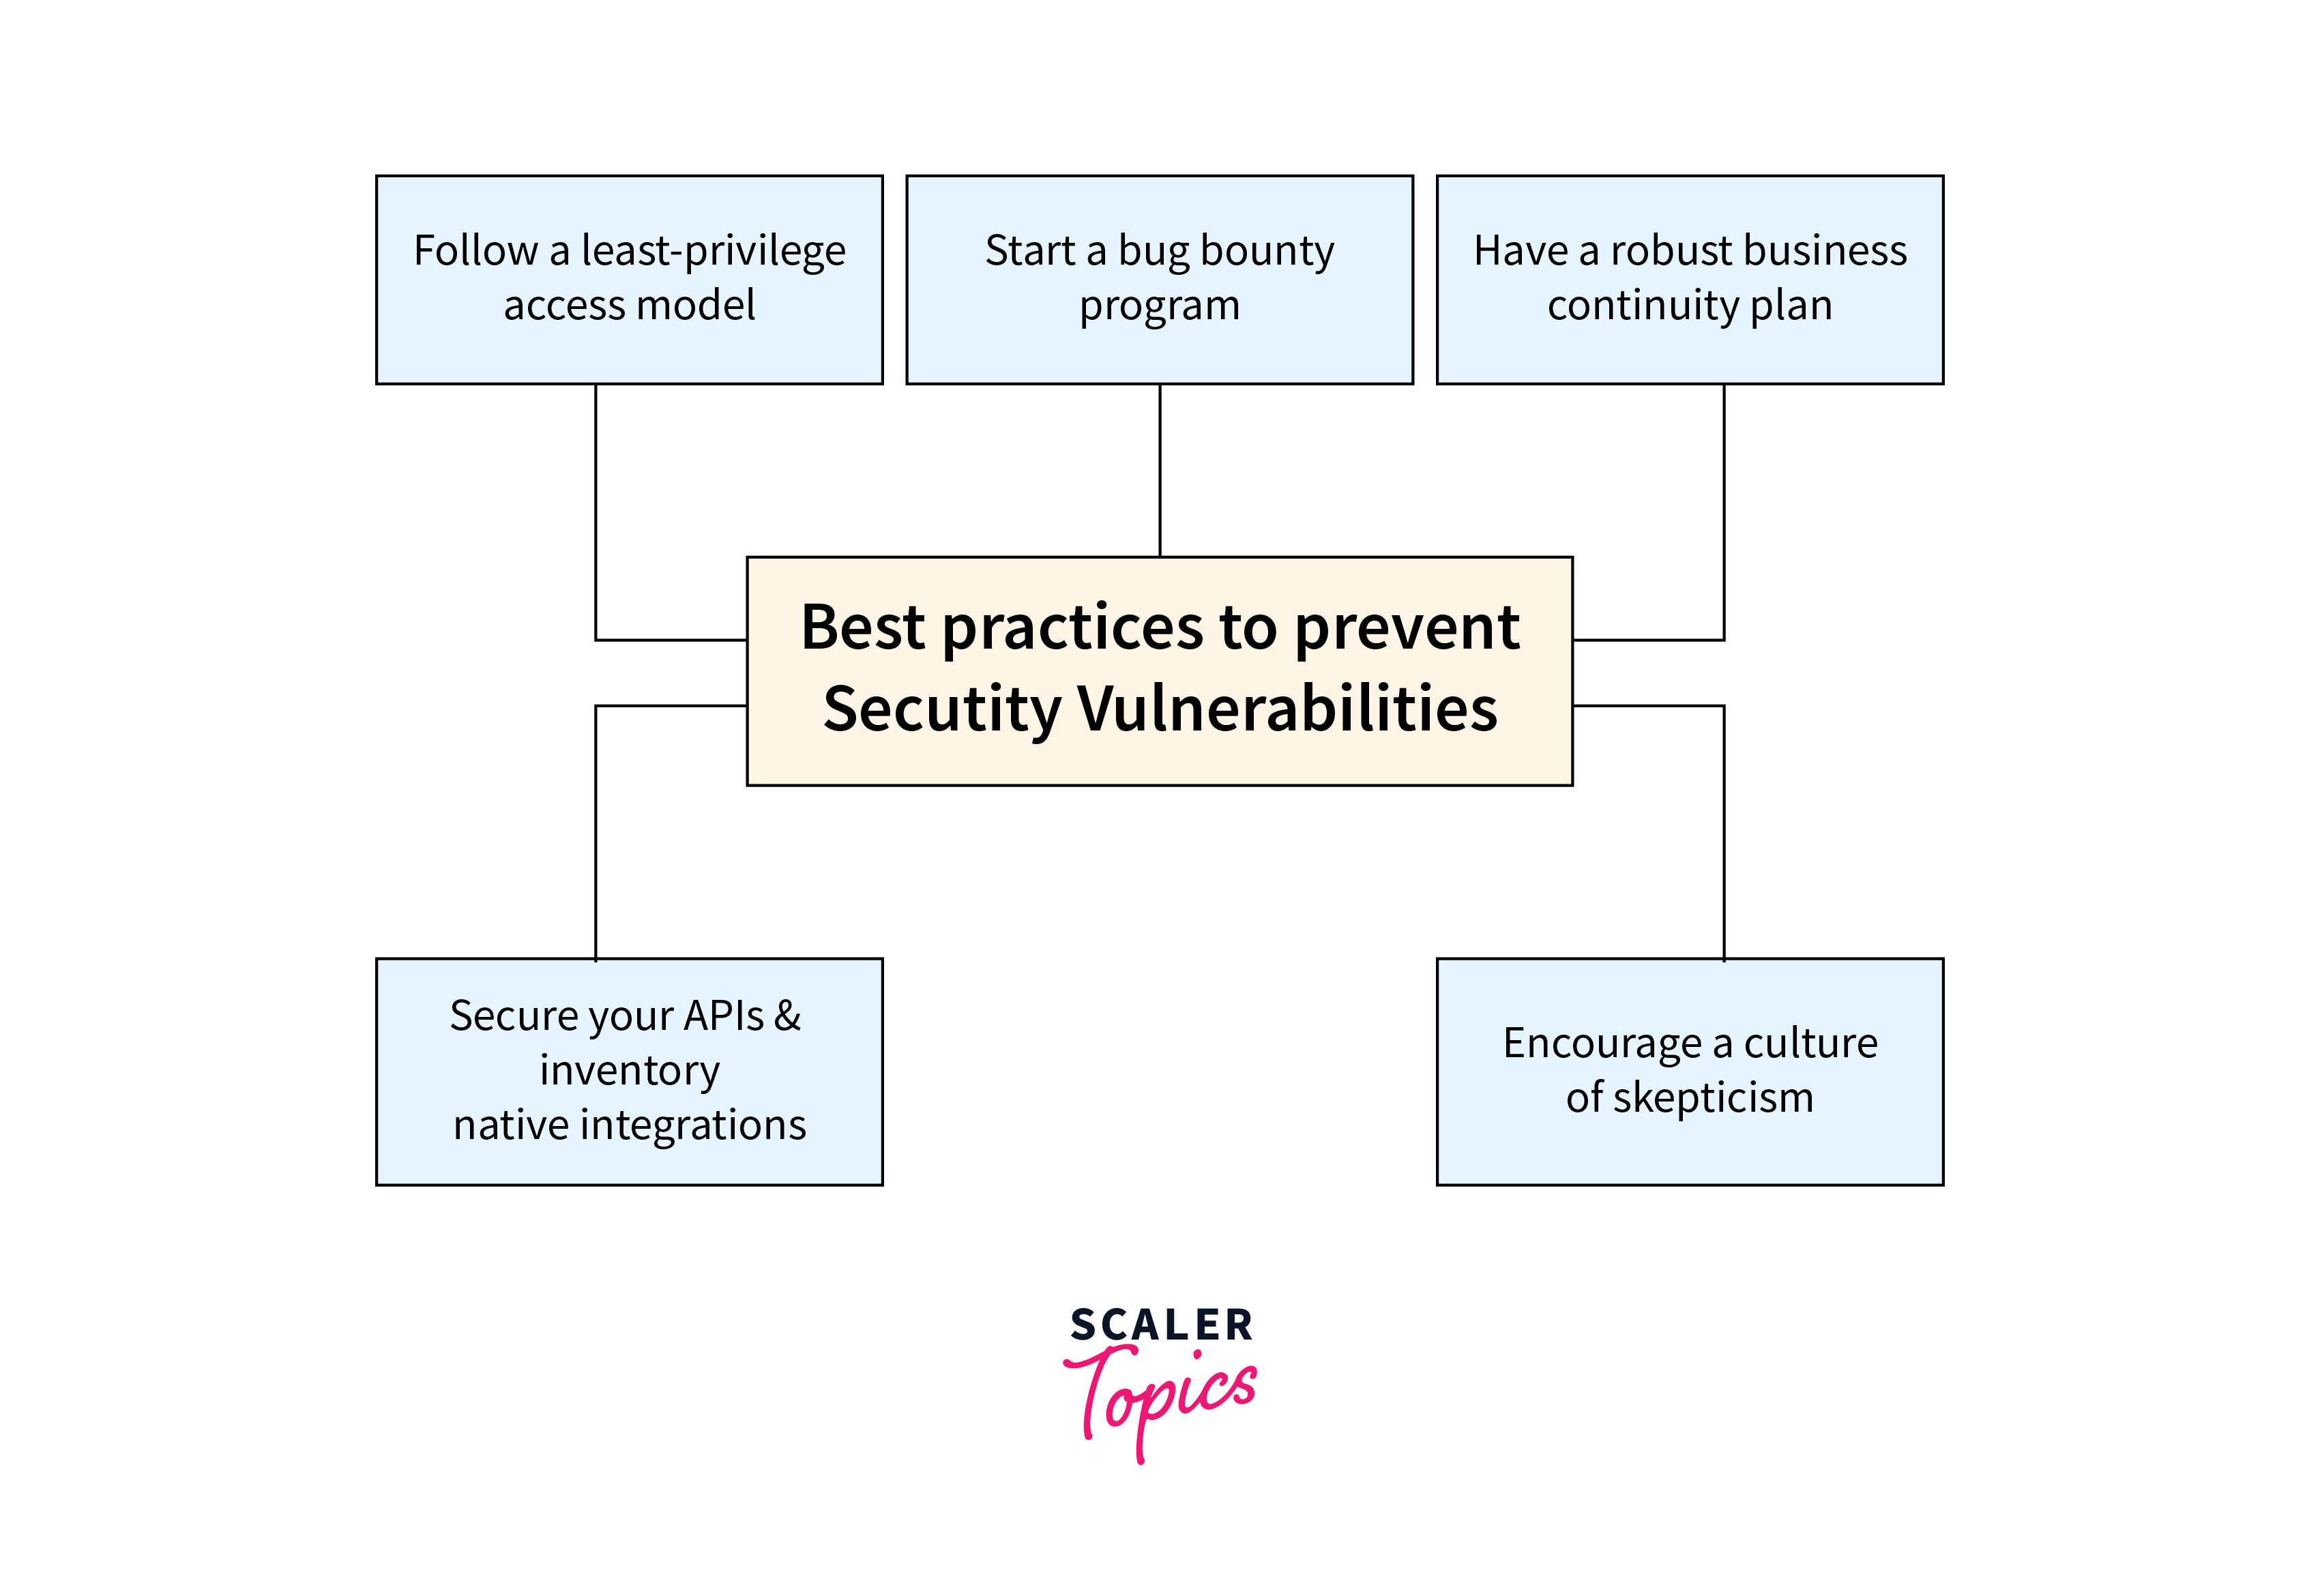 strategies to effectively mitigate vulnerabilities